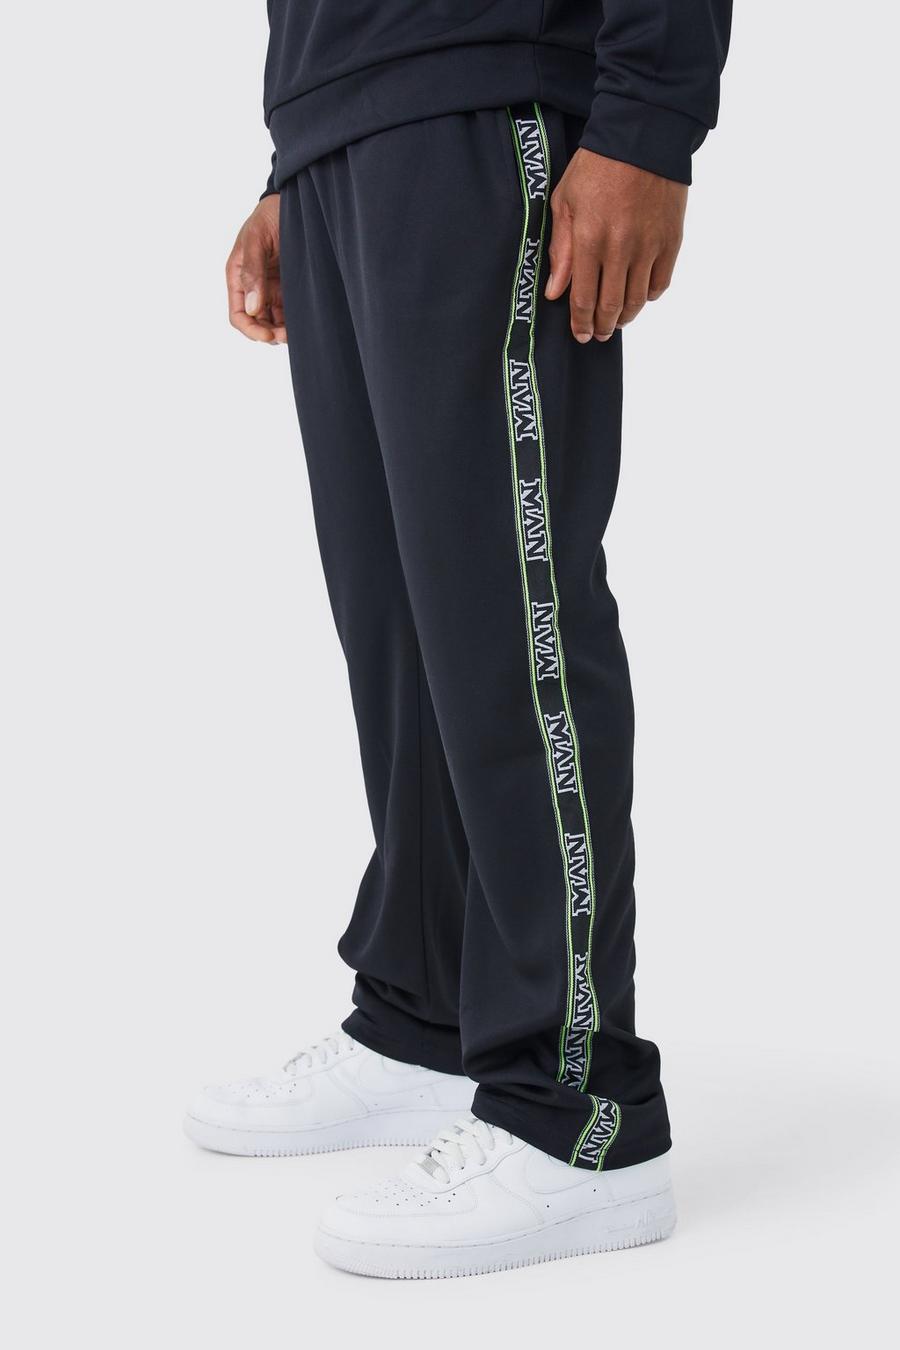 Pantalón deportivo Regular de tejido por urdimbre con franja lateral, Black